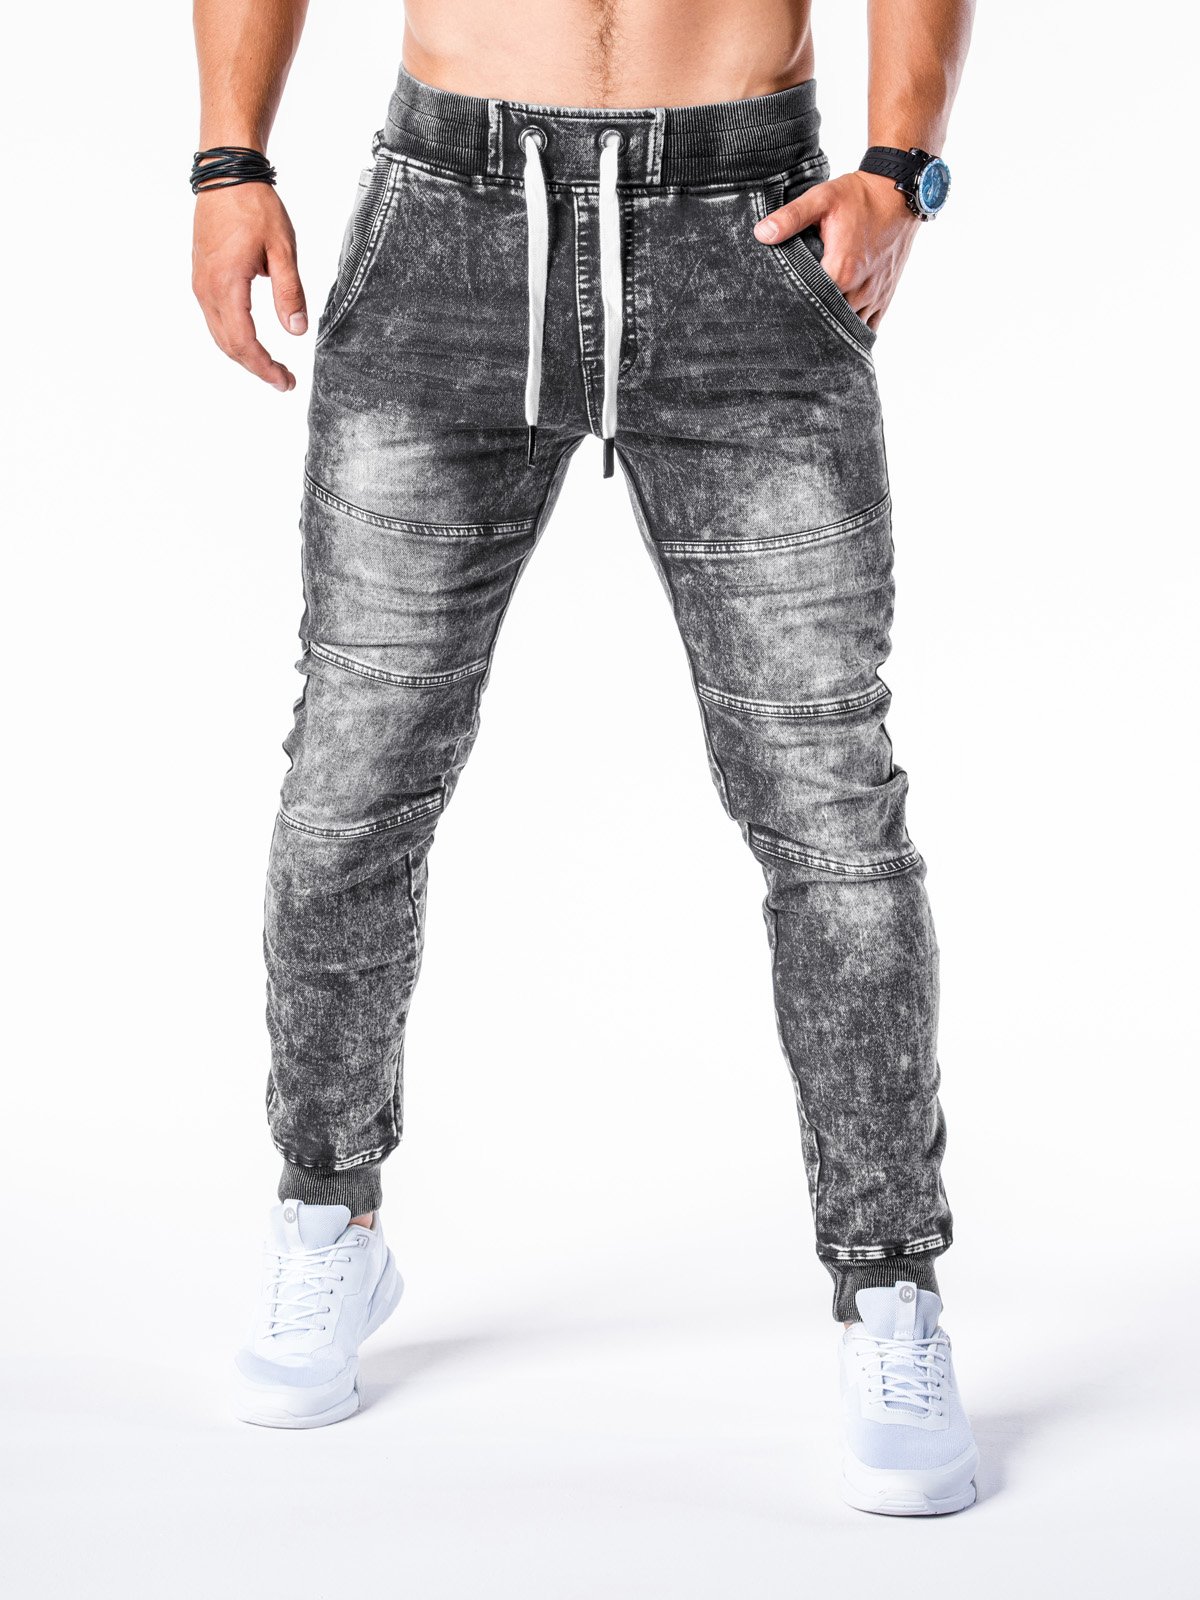 Men's jeans joggers P551 - dark grey | MODONE wholesale - Clothing For Men